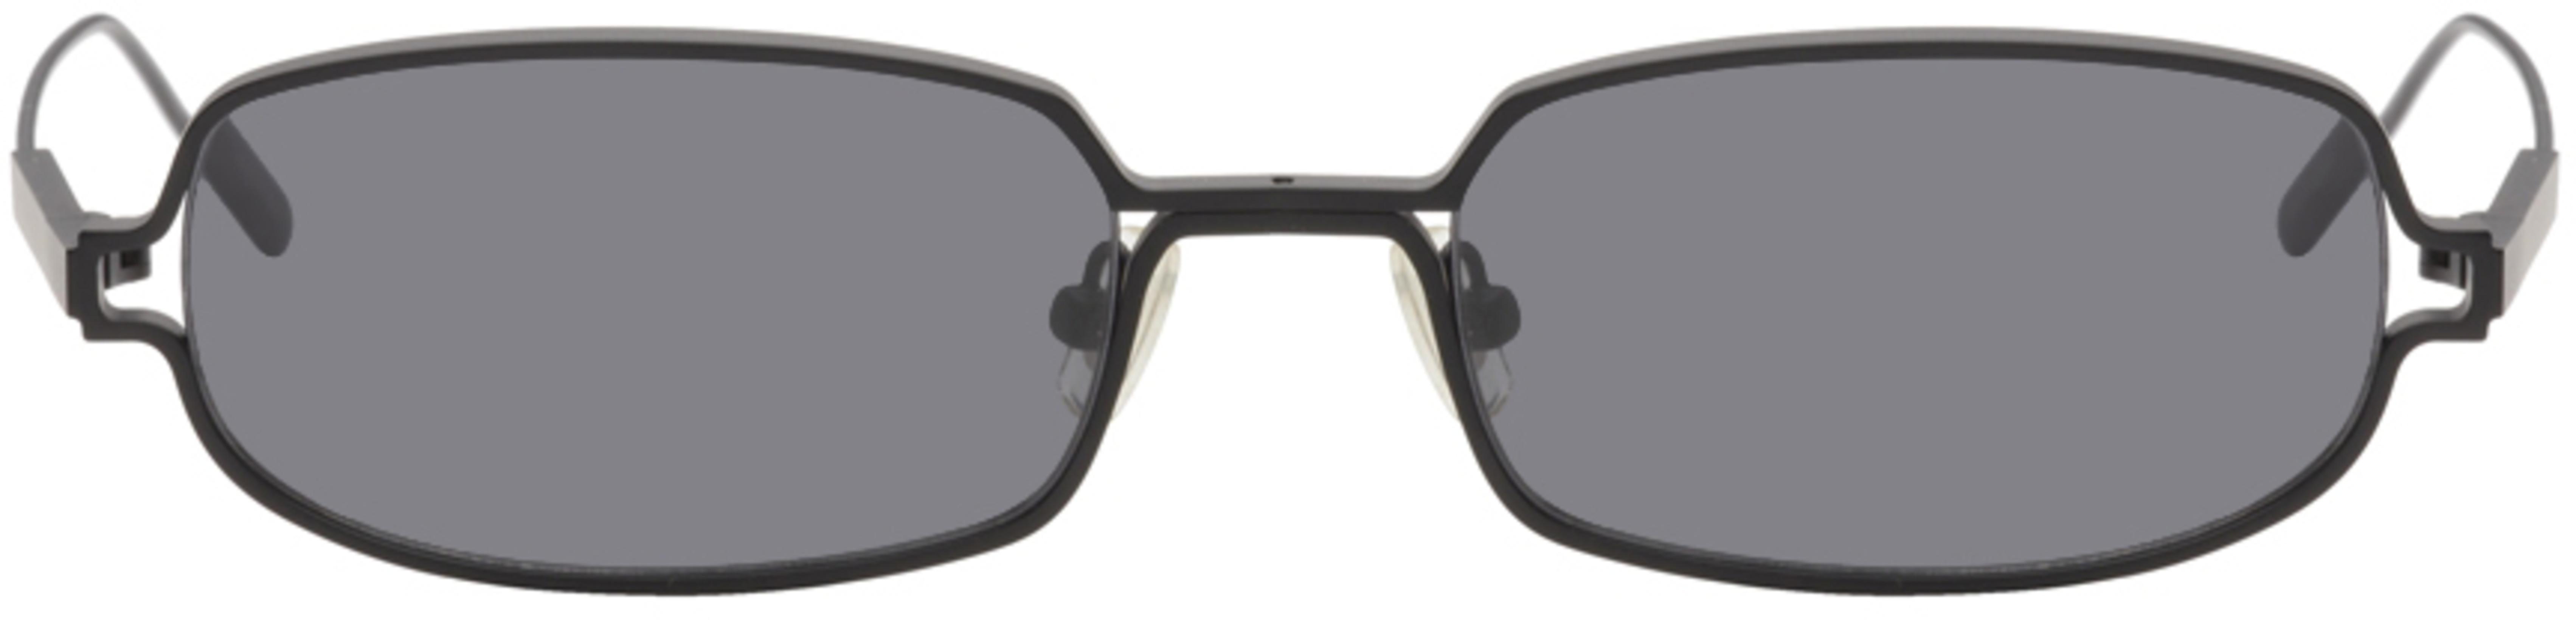 Black Petrichor Sunglasses by BONNIE CLYDE